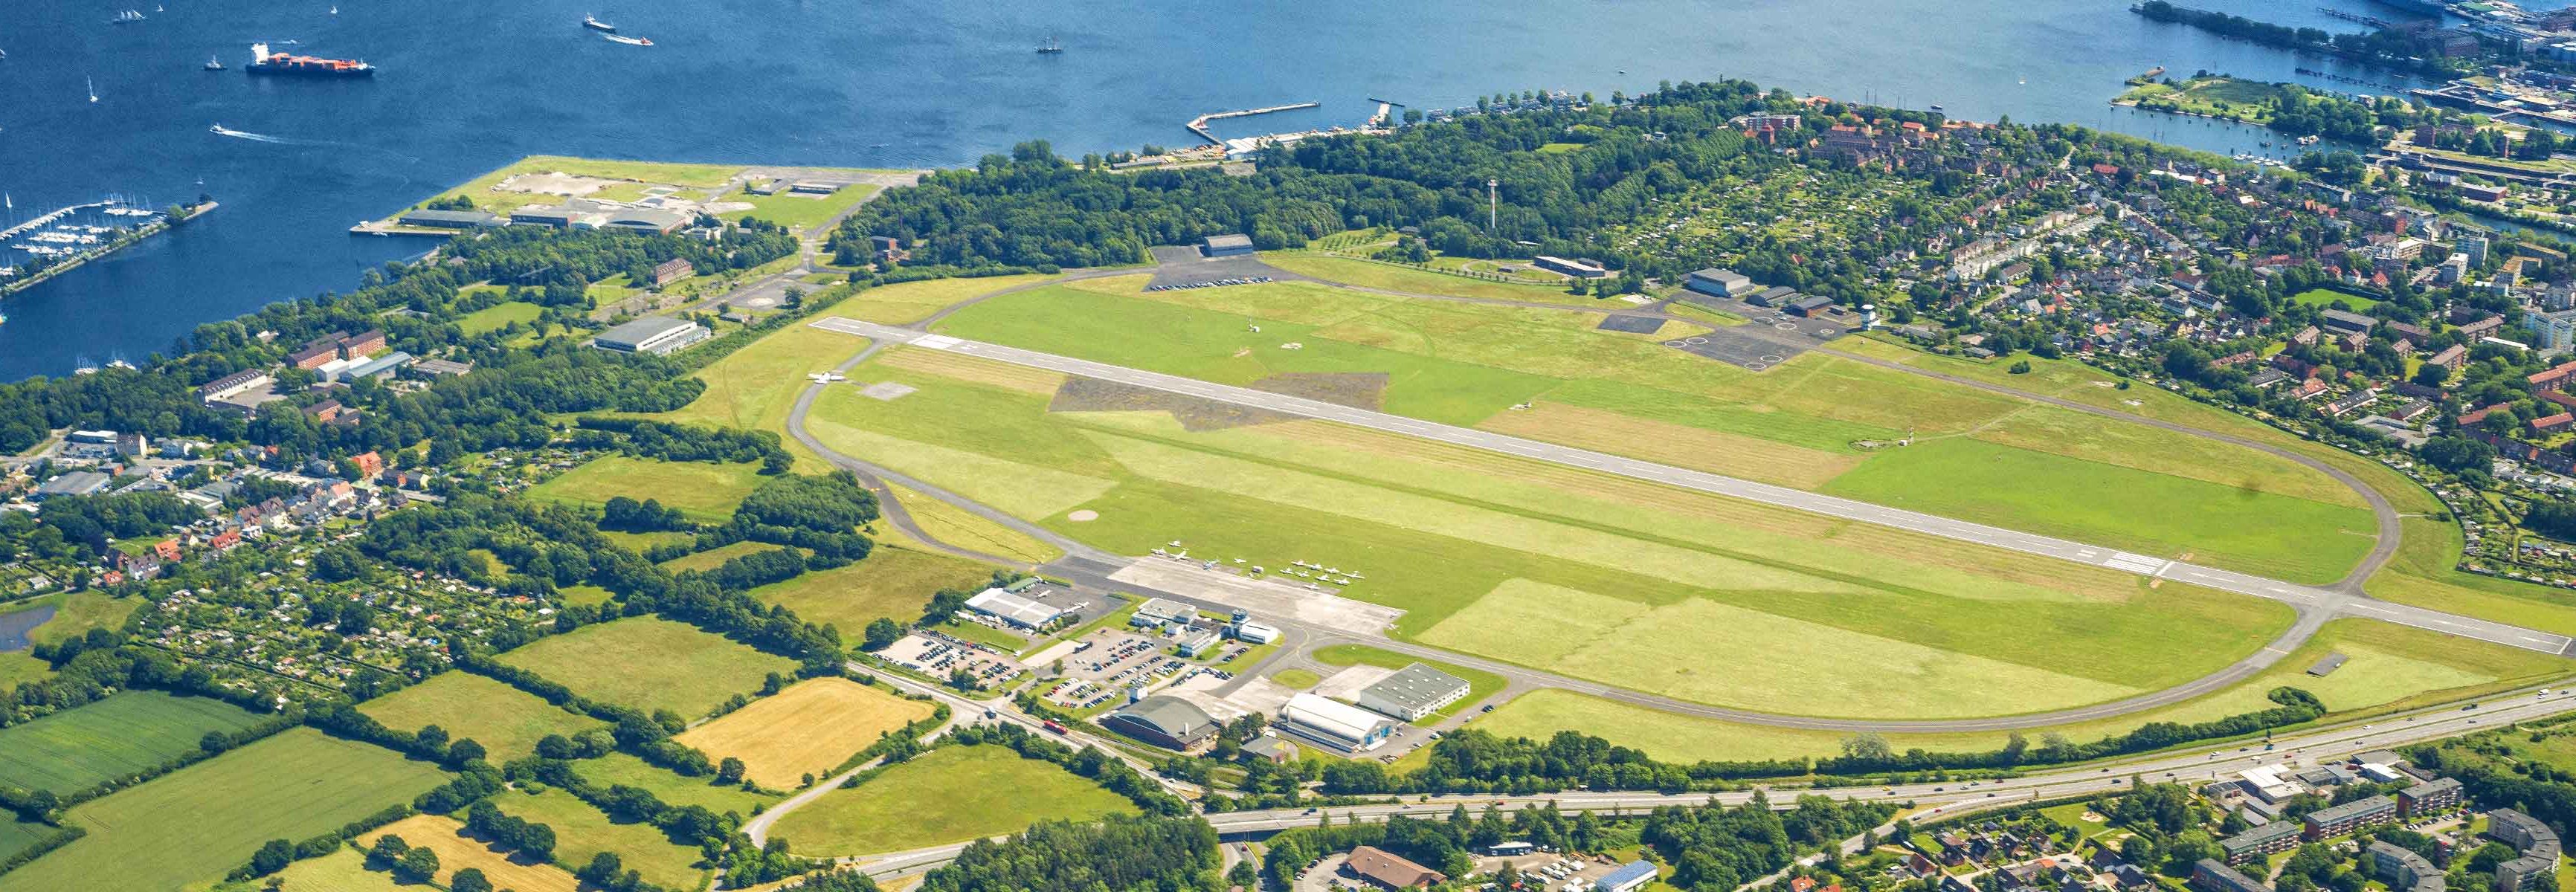 Aerial view Airport Kiel